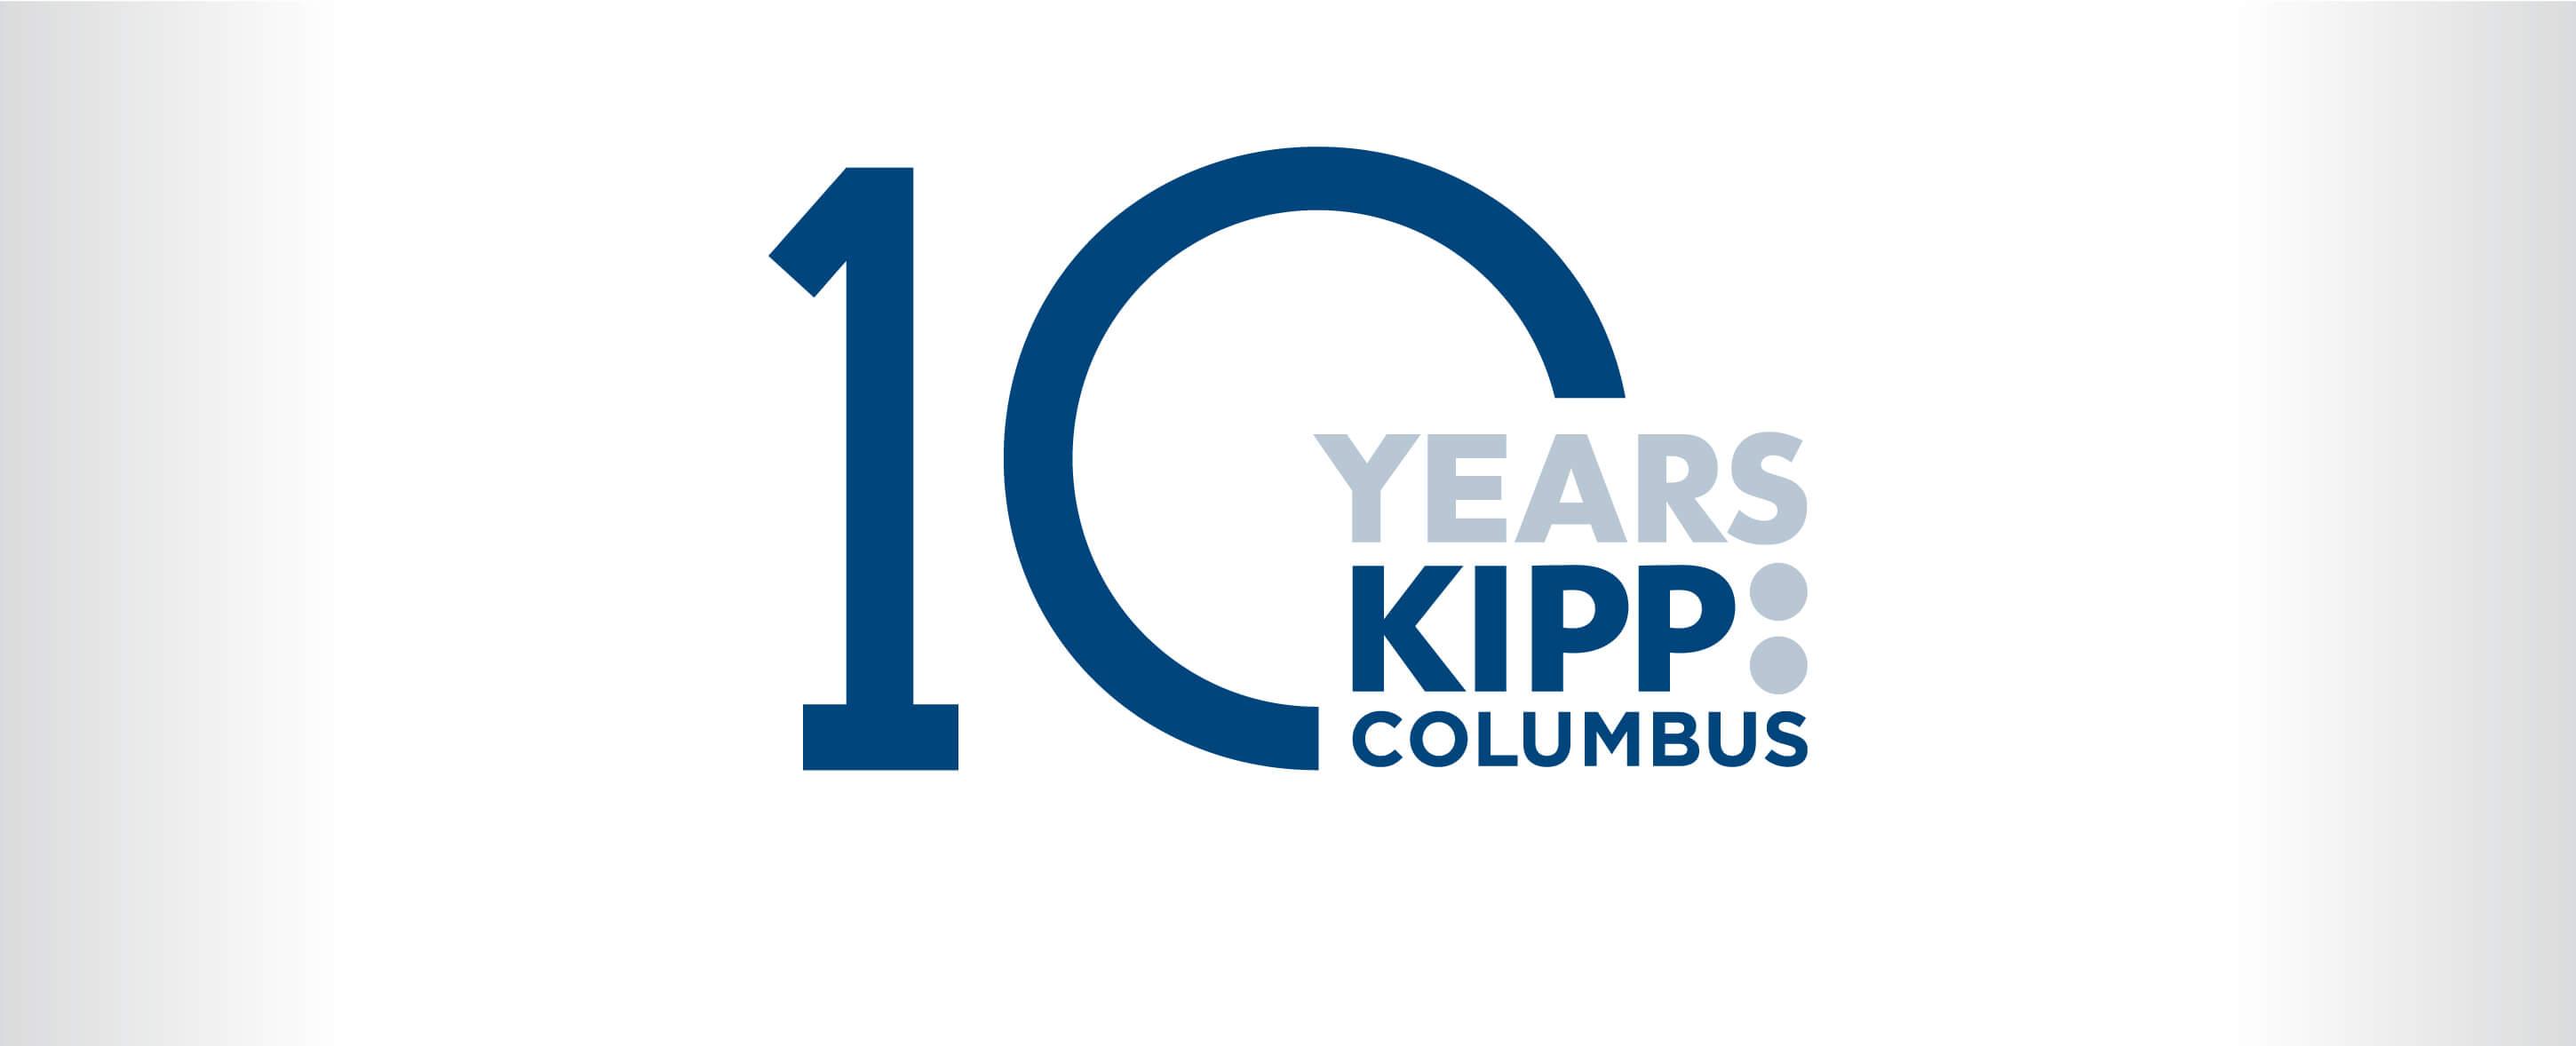 Kipp Logo - KIPP Columbus Celebrates 10 Years - Ibel Agency